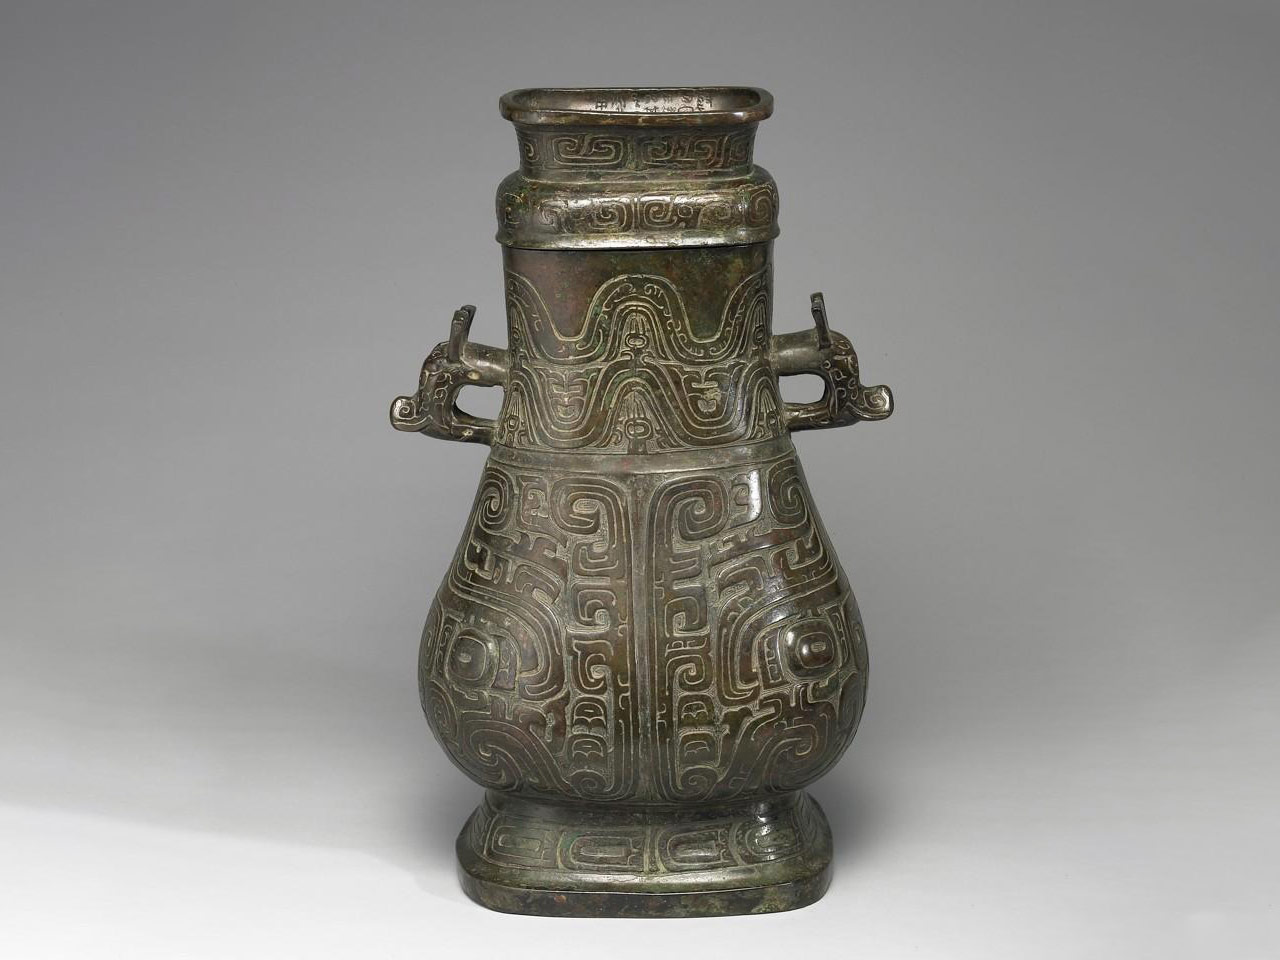 Hu wine vessel of Yin-gou, Mid Western Zhou Dynasty